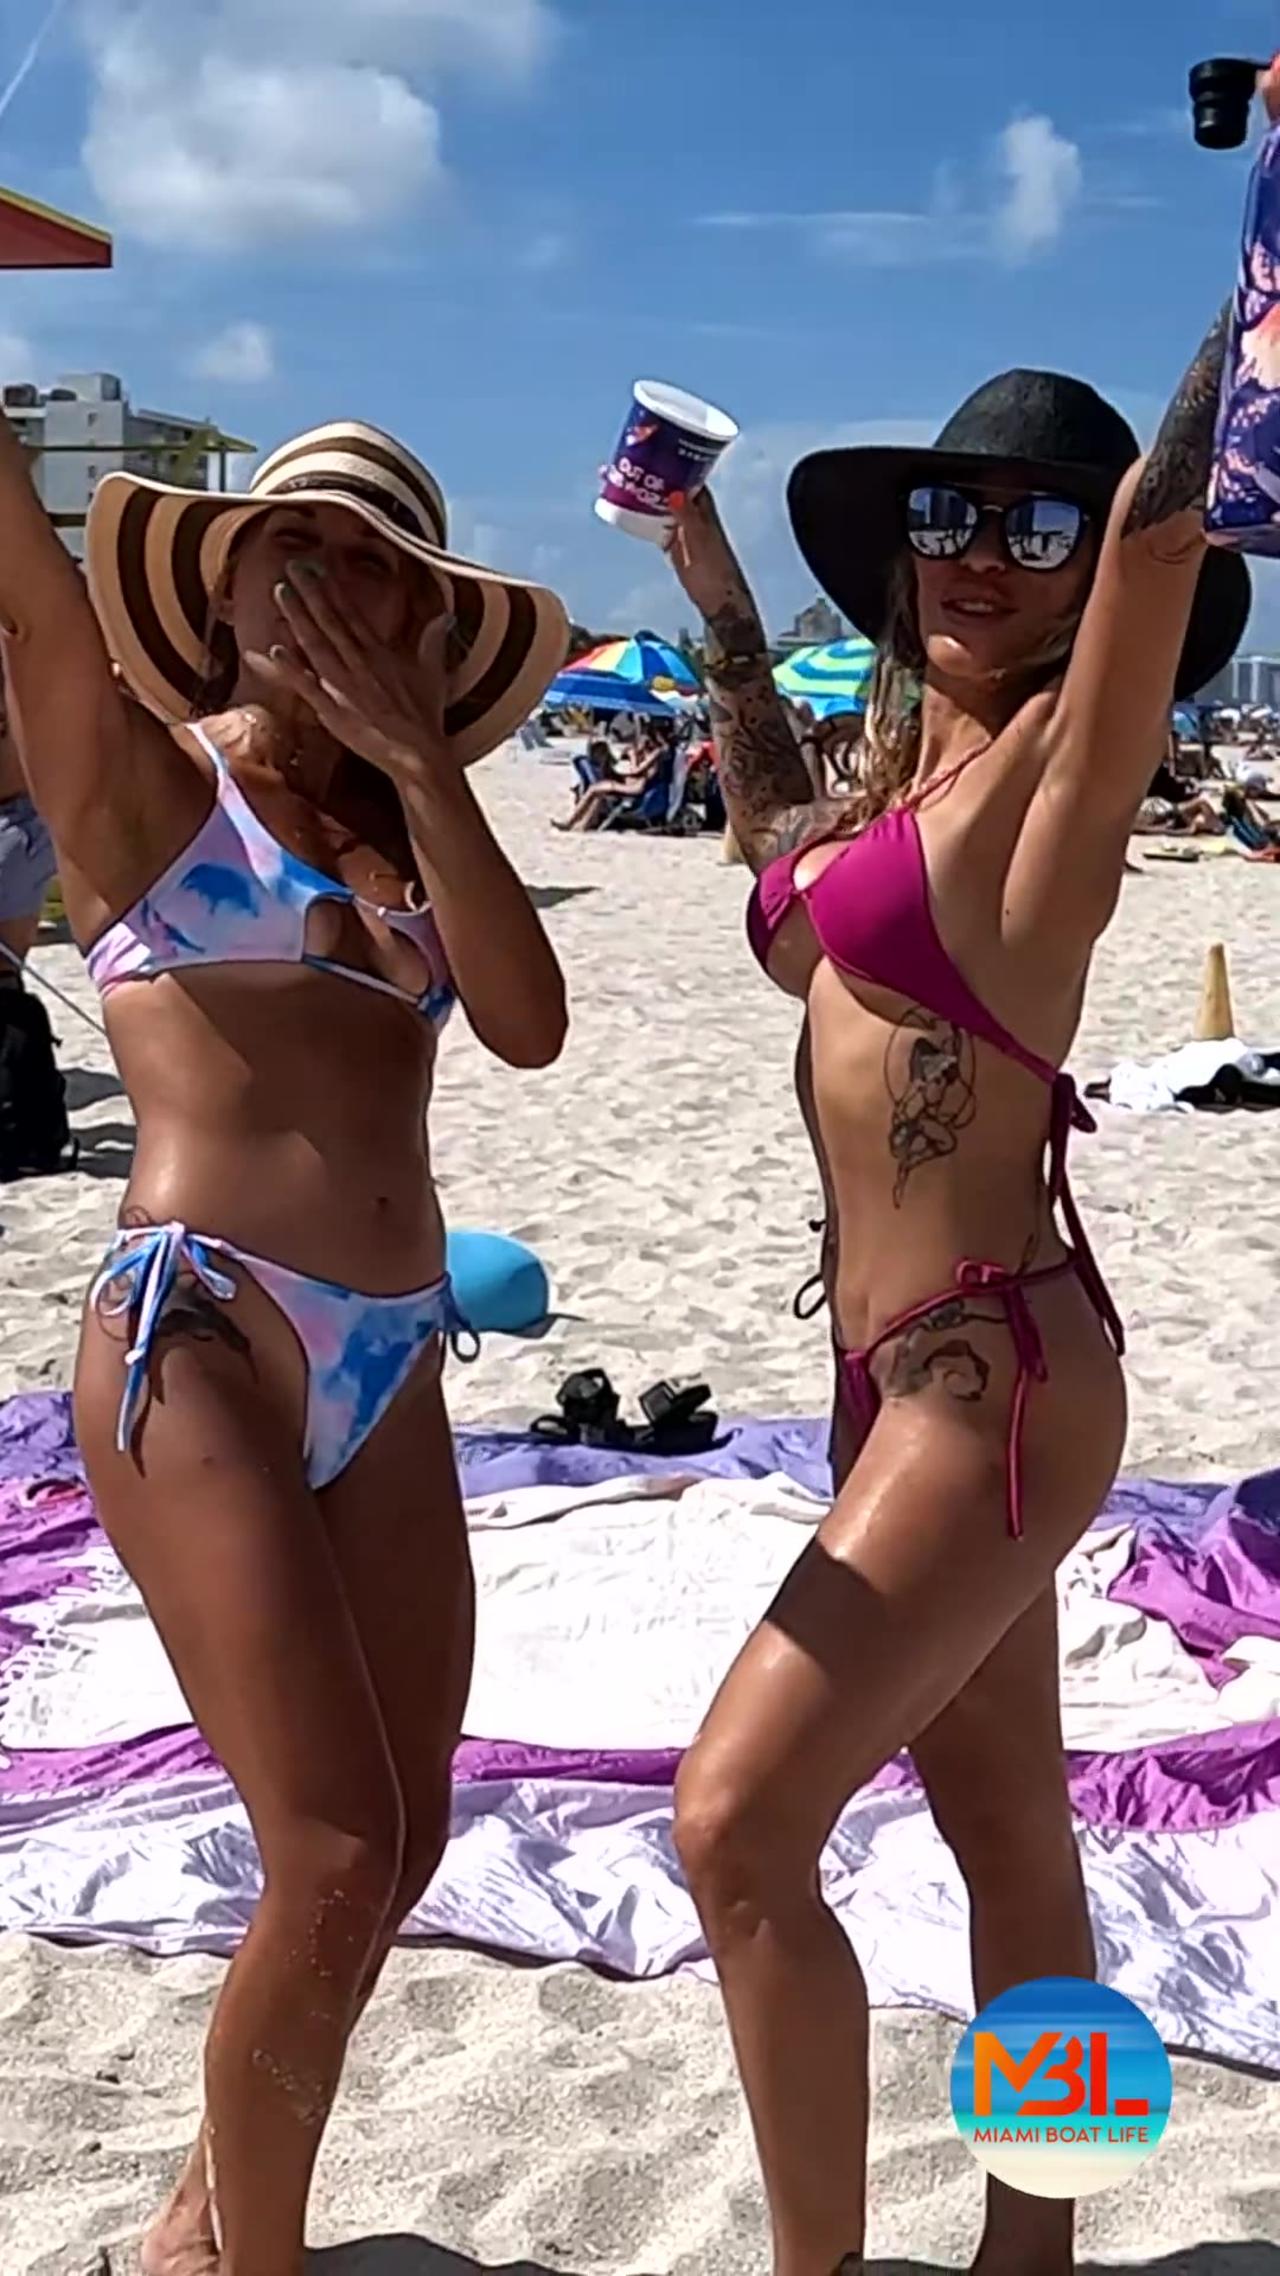 TATTOO GIRLS IN MIAMI BEACH!!!